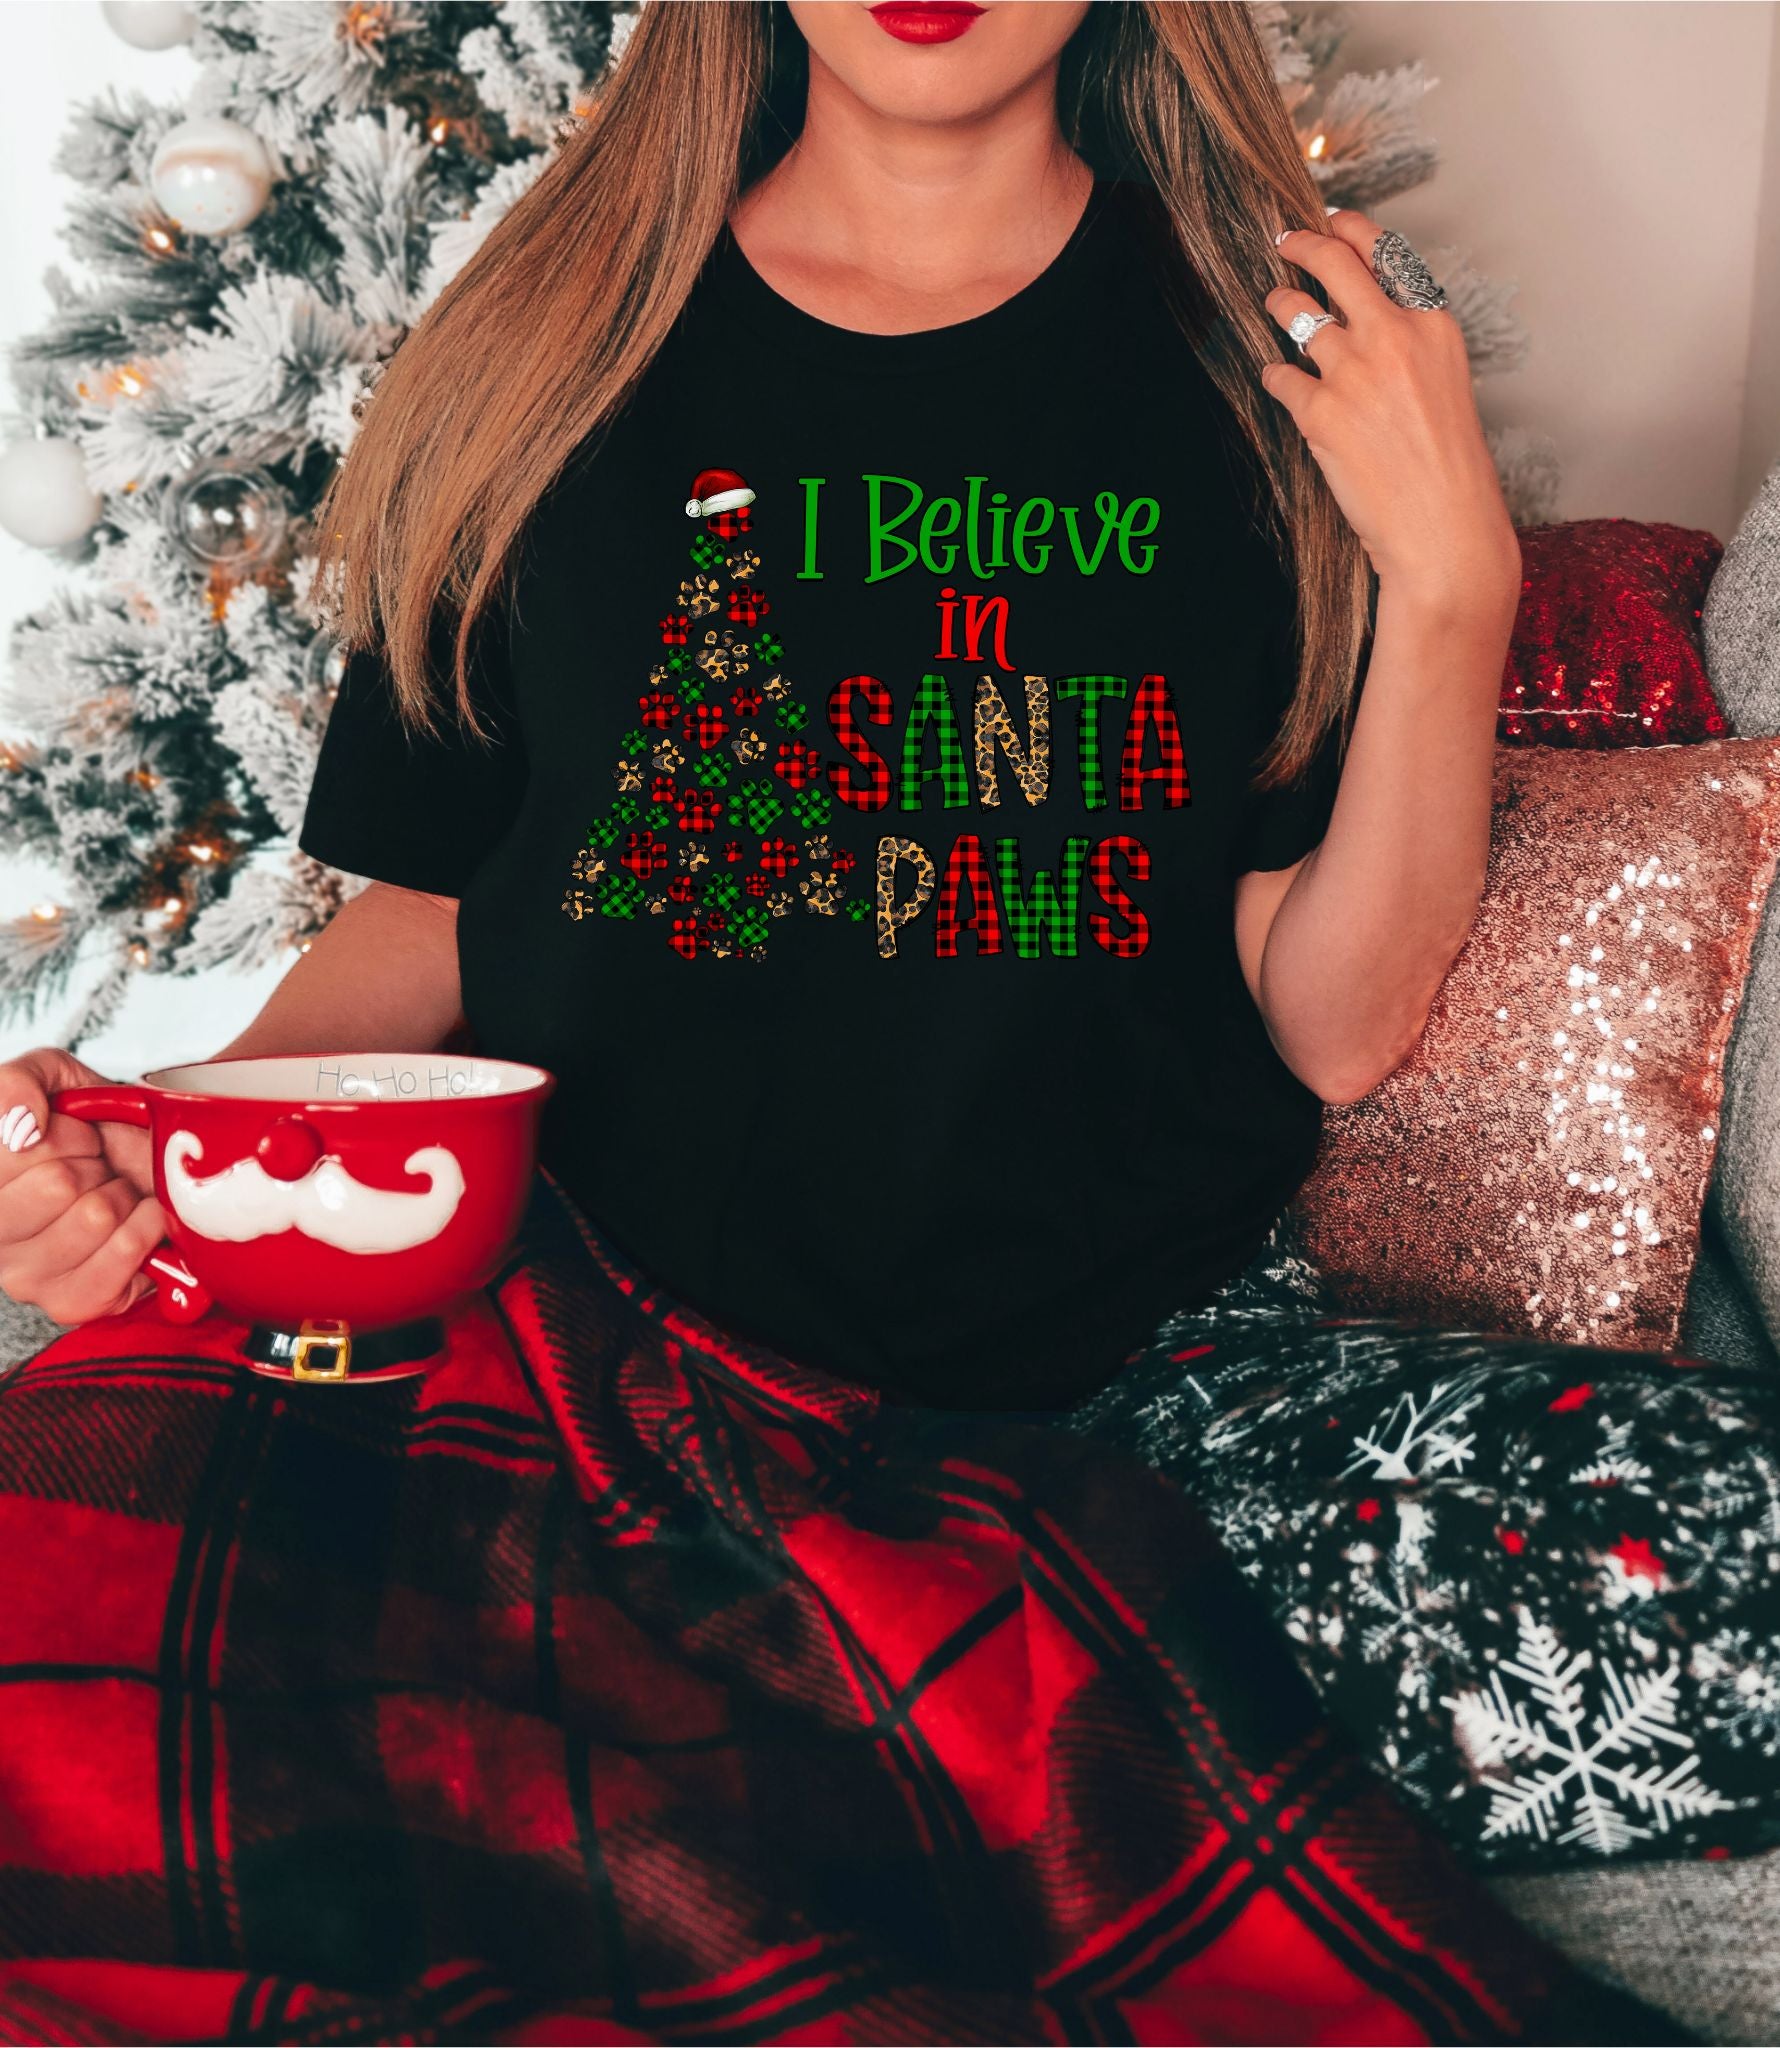 I Believe in Santa Paws Shirt